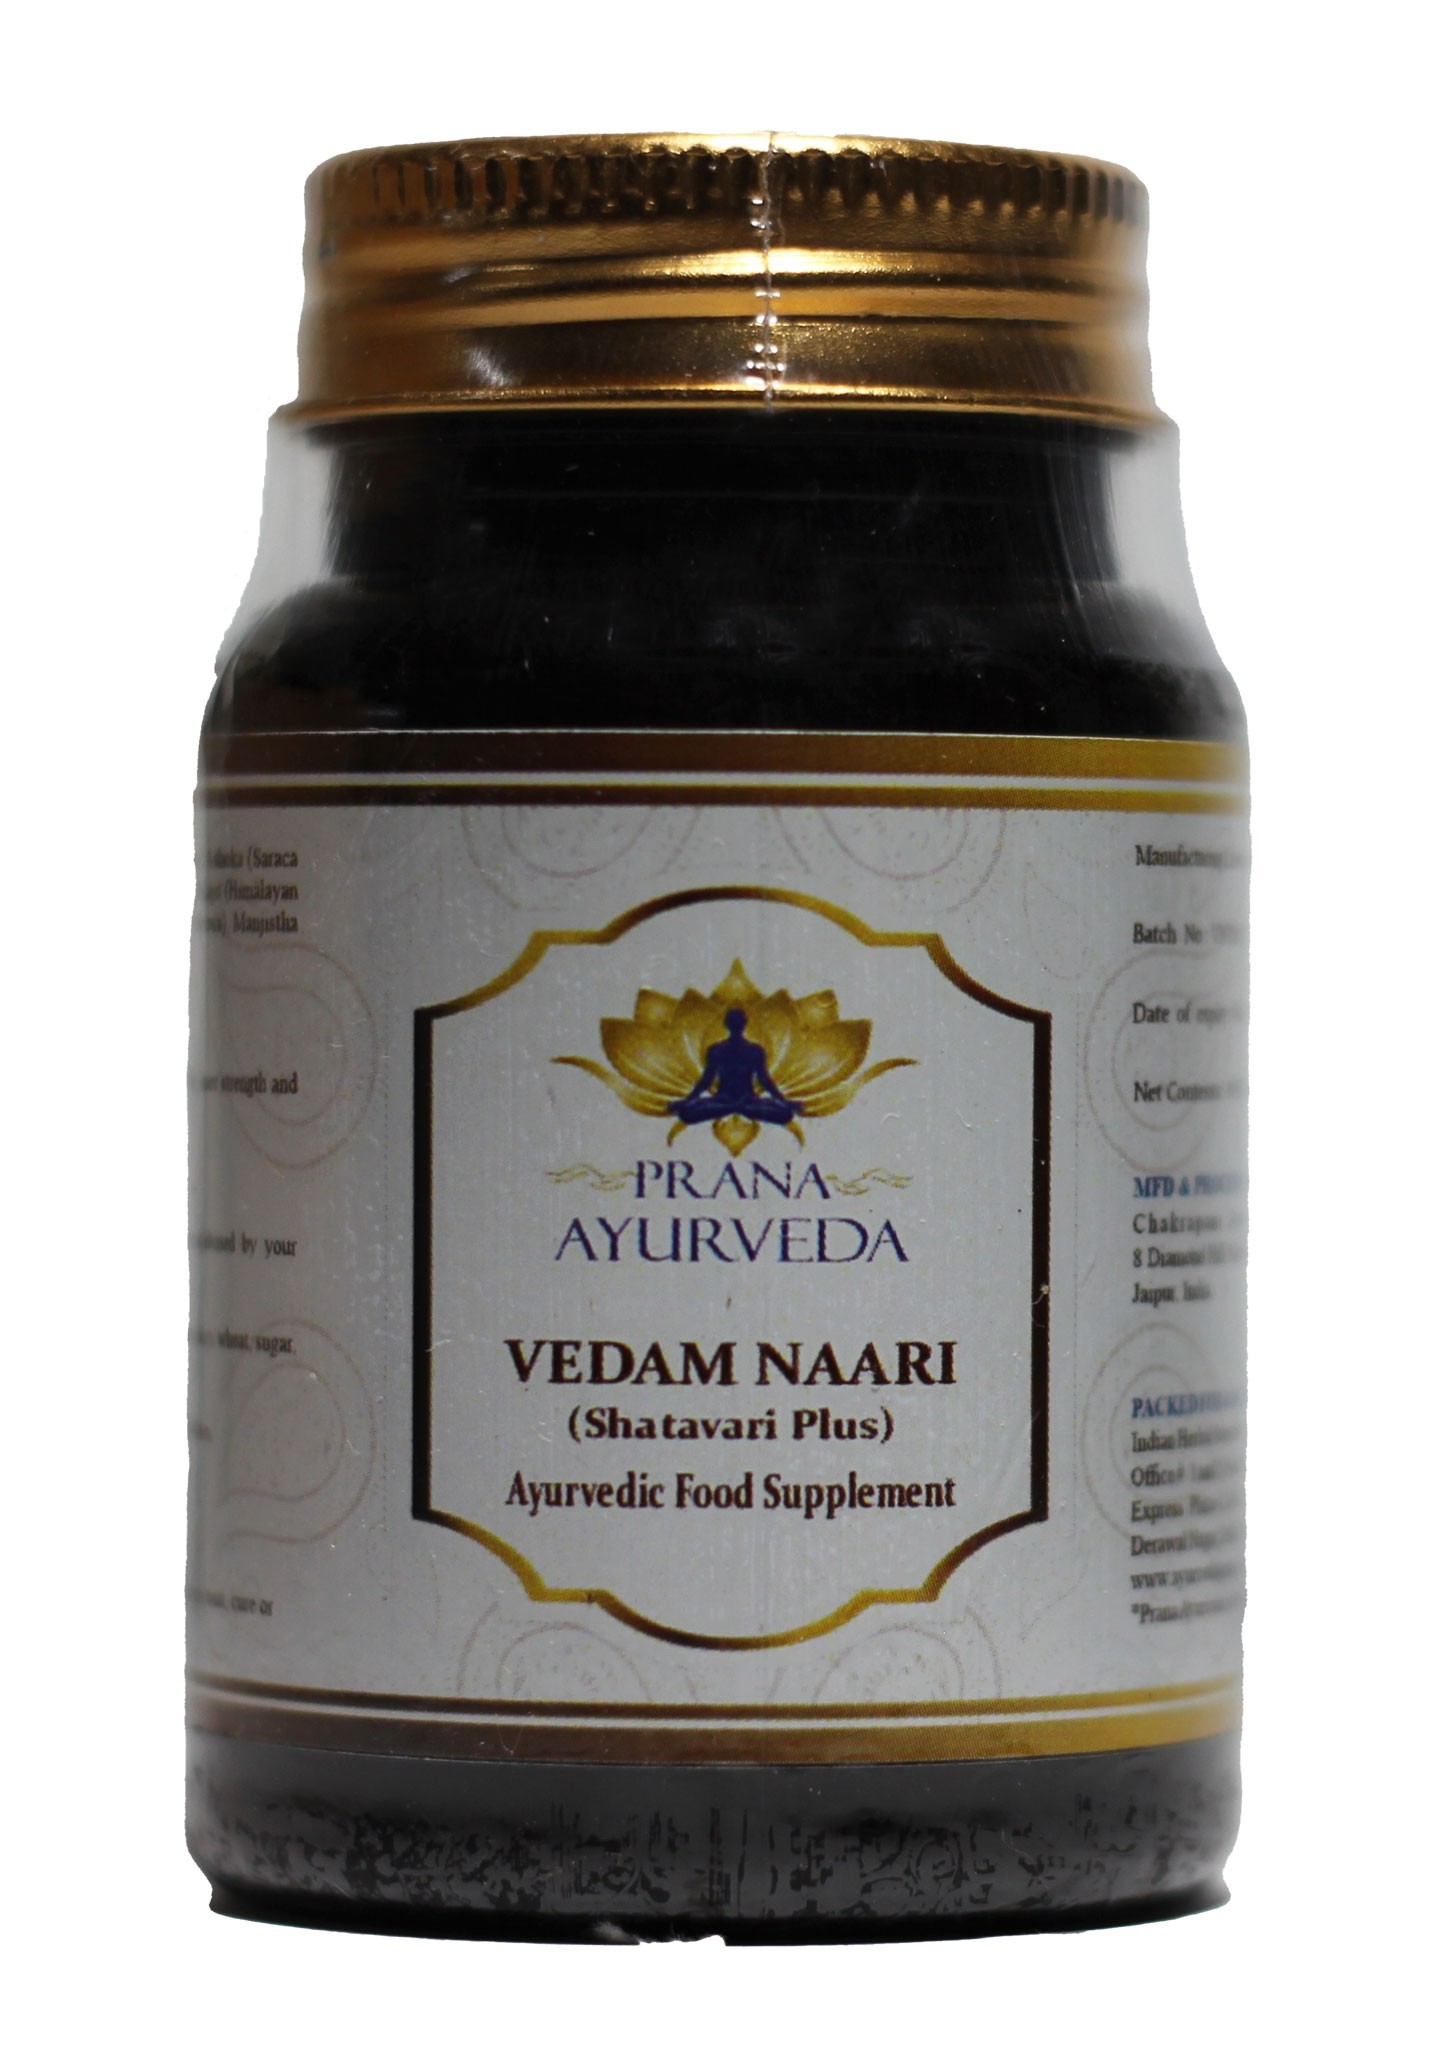  Prana Ayurveda SHATAVARI PLUS  (Vedam Naari) 90 comprimés 700mg